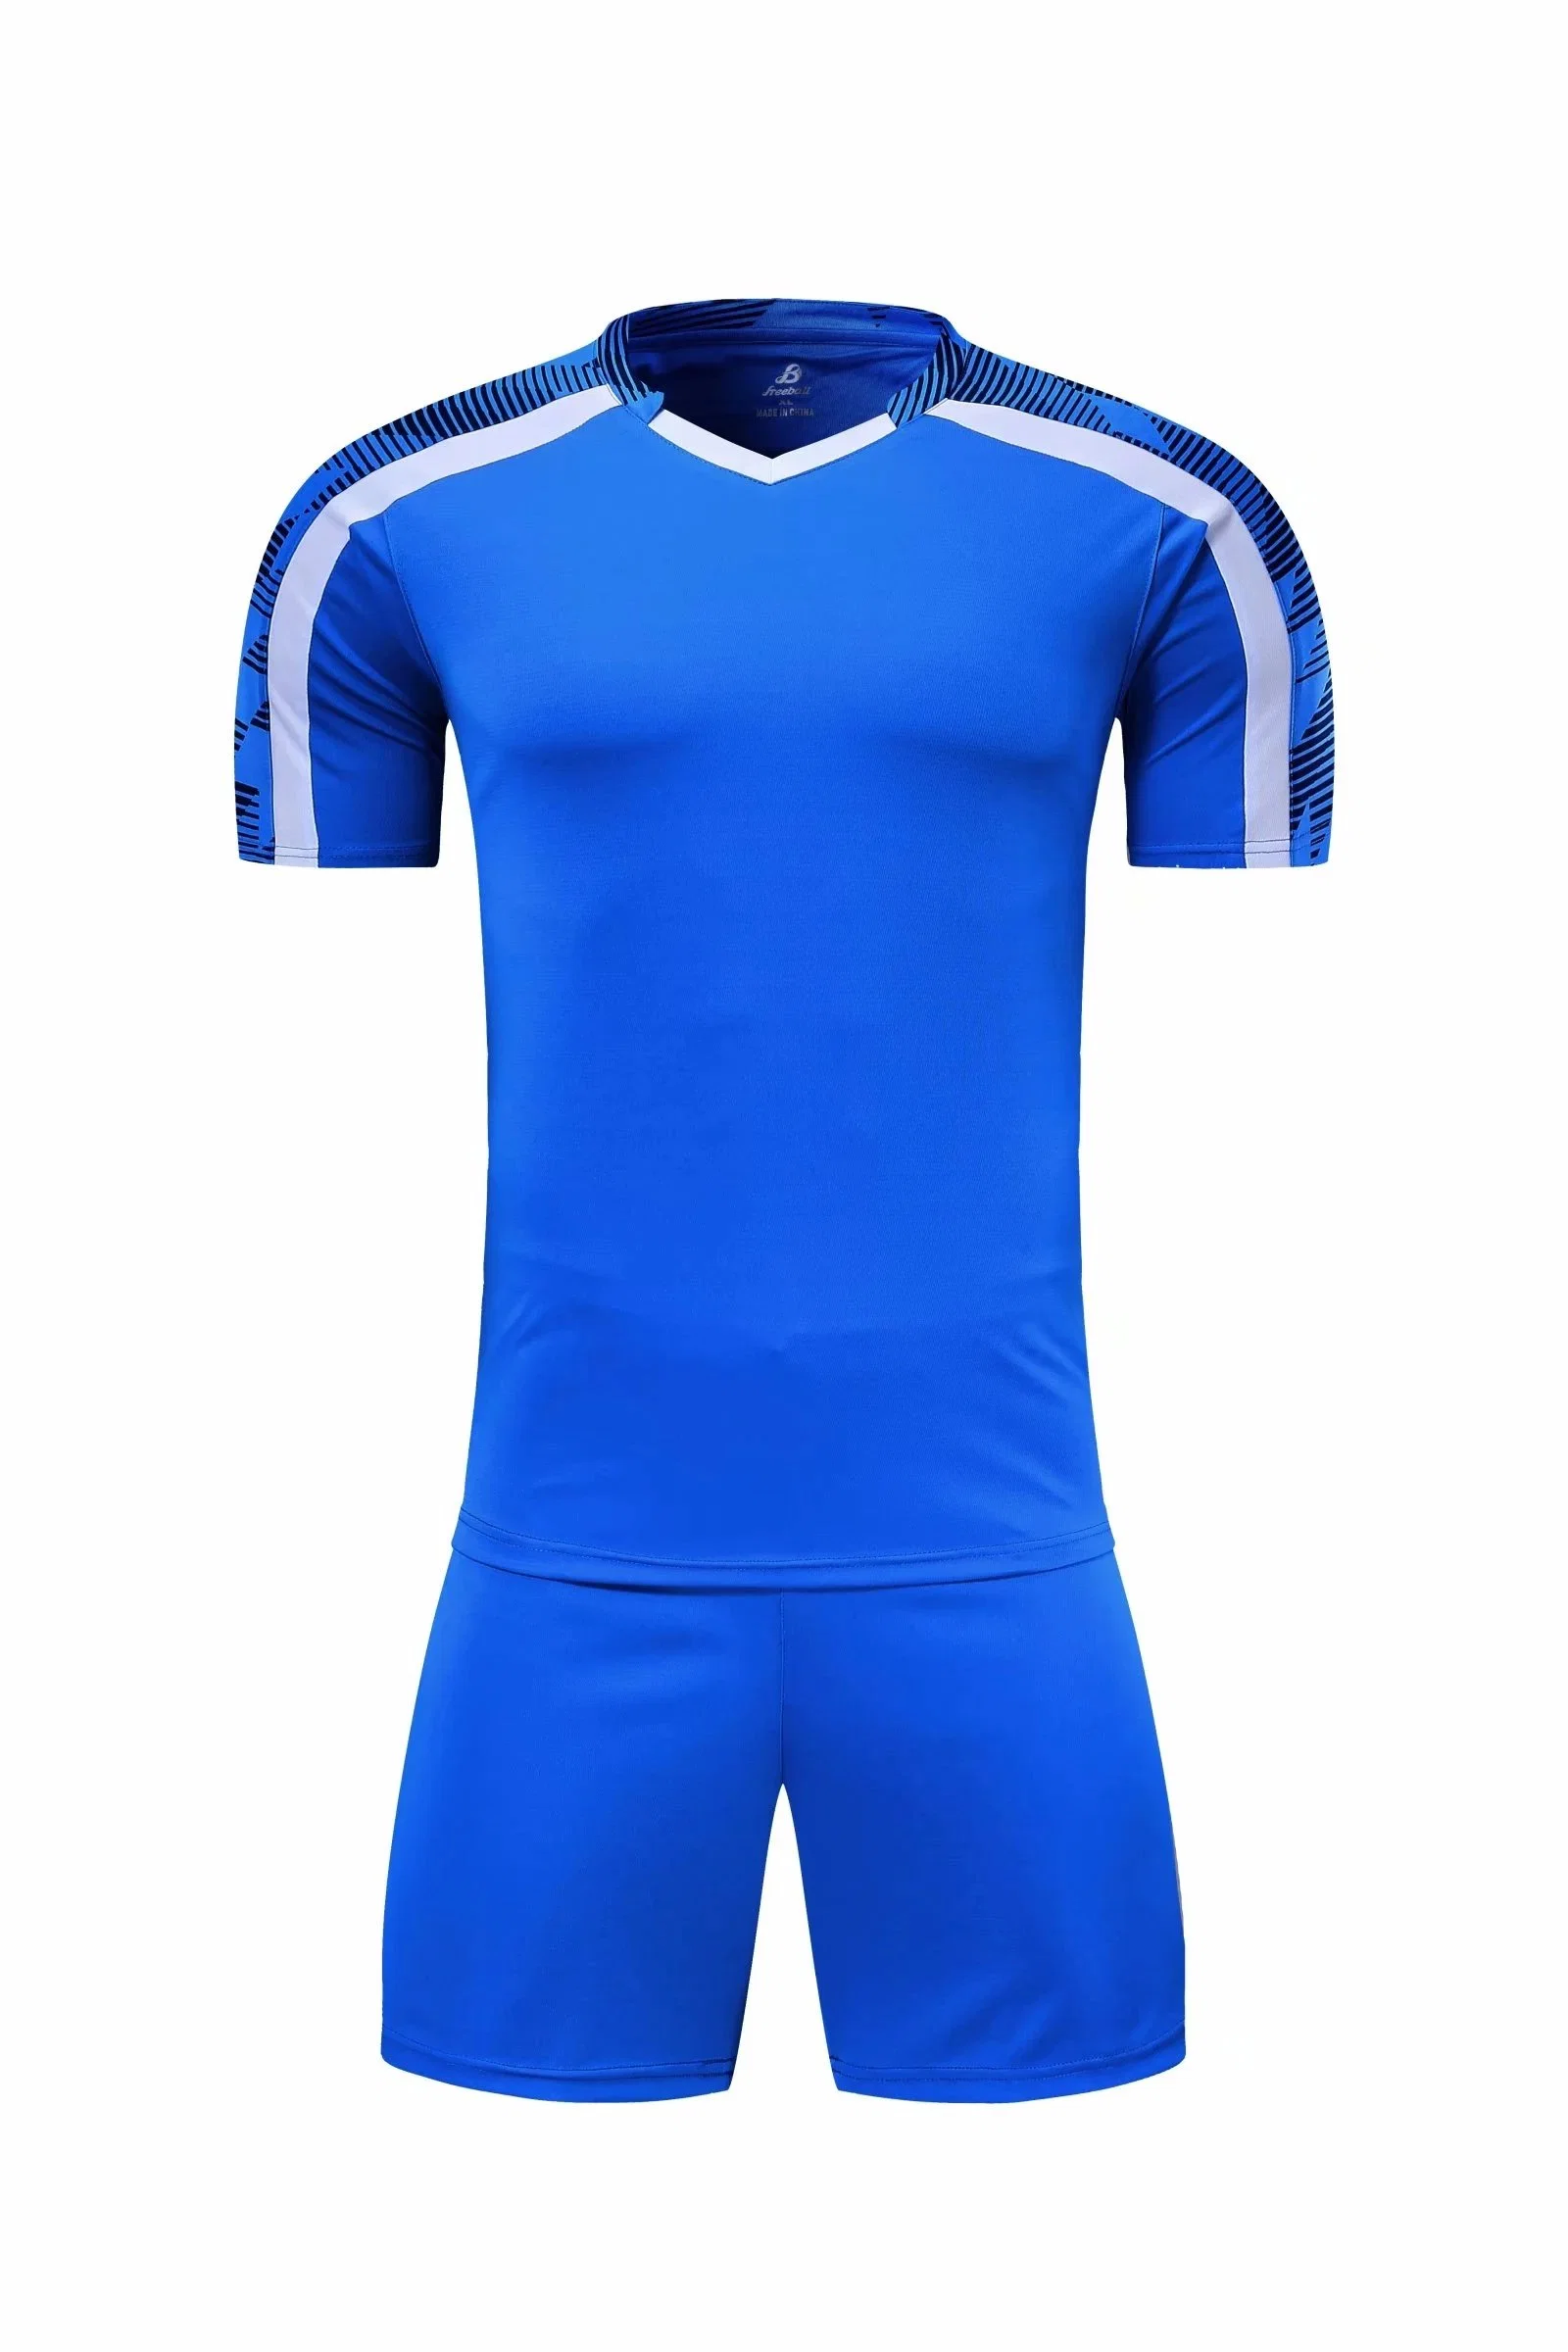 Men Short Sleeve Red Soccer Jersey Set Green Football Uniform Blue Kids Soccer Shirt Customized Name Number